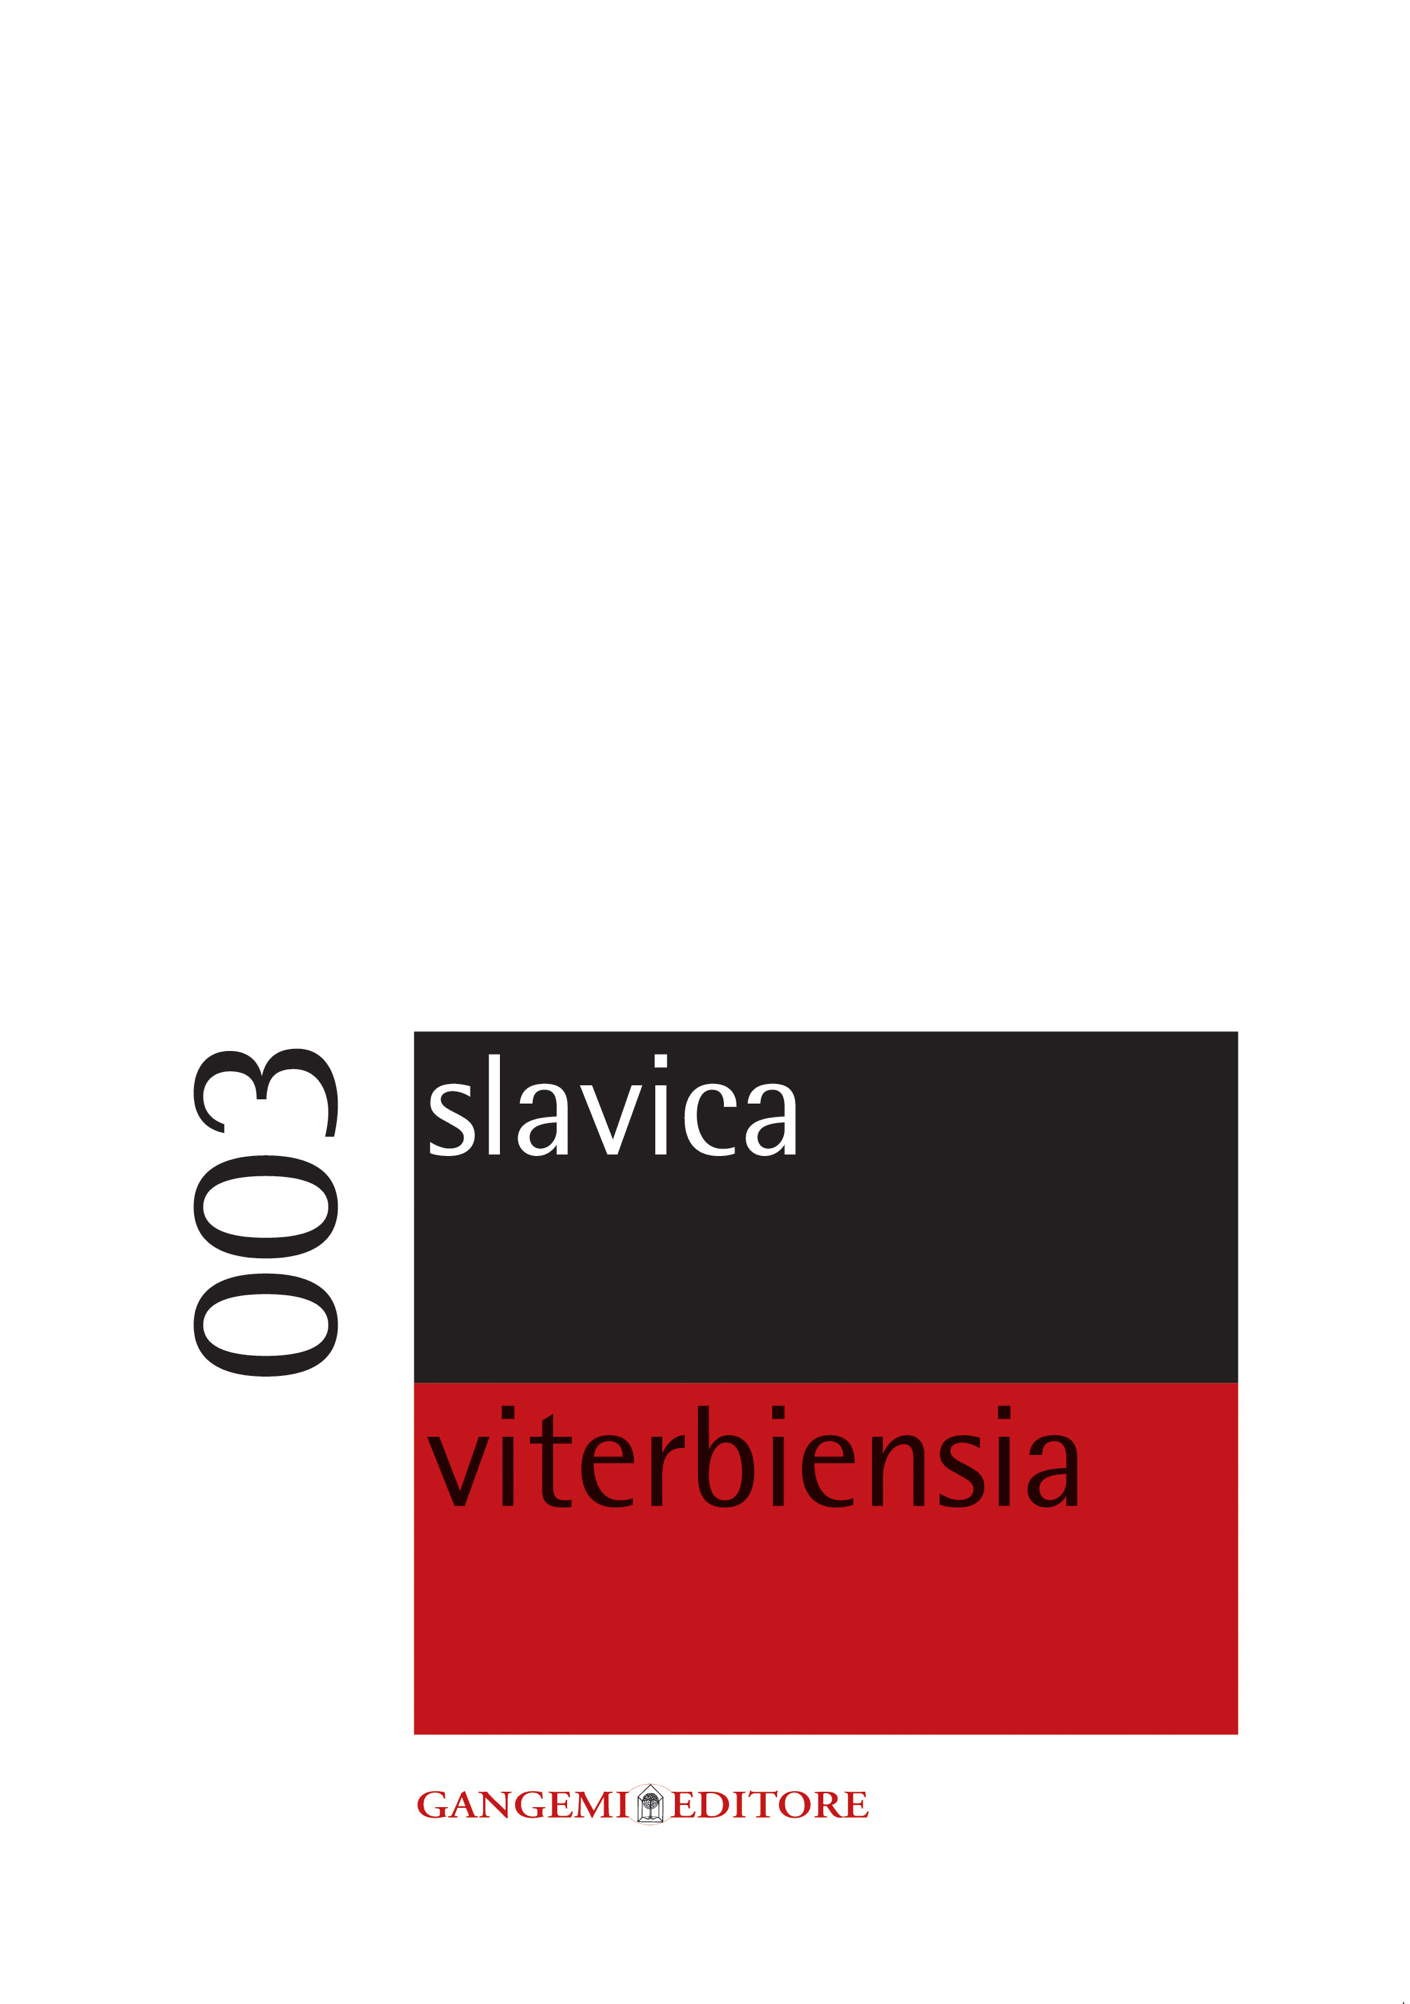 Slavica viterbiensia 003 - Librerie.coop